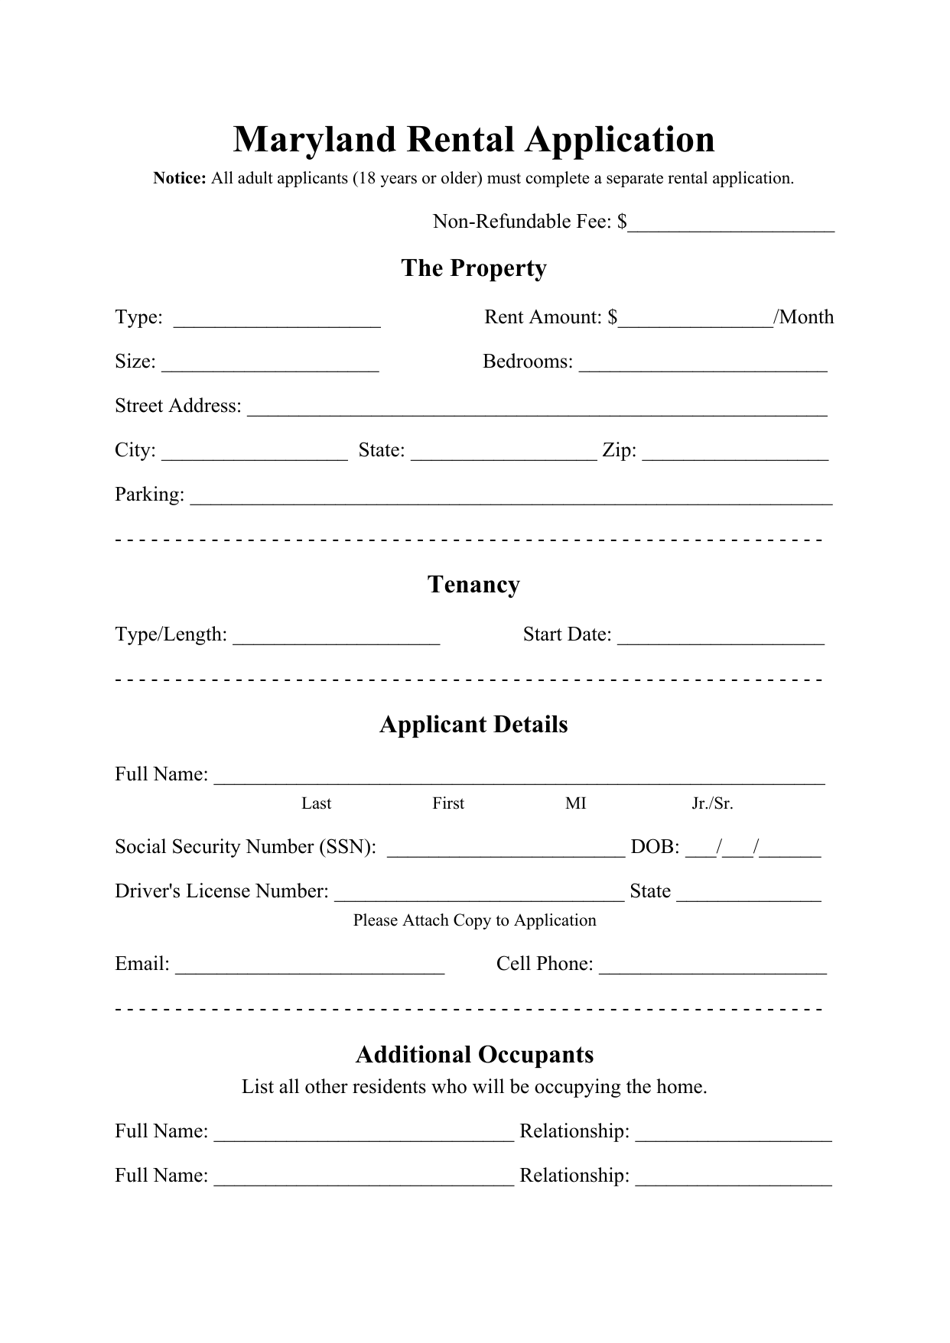 maryland-rental-application-form-download-printable-pdf-templateroller